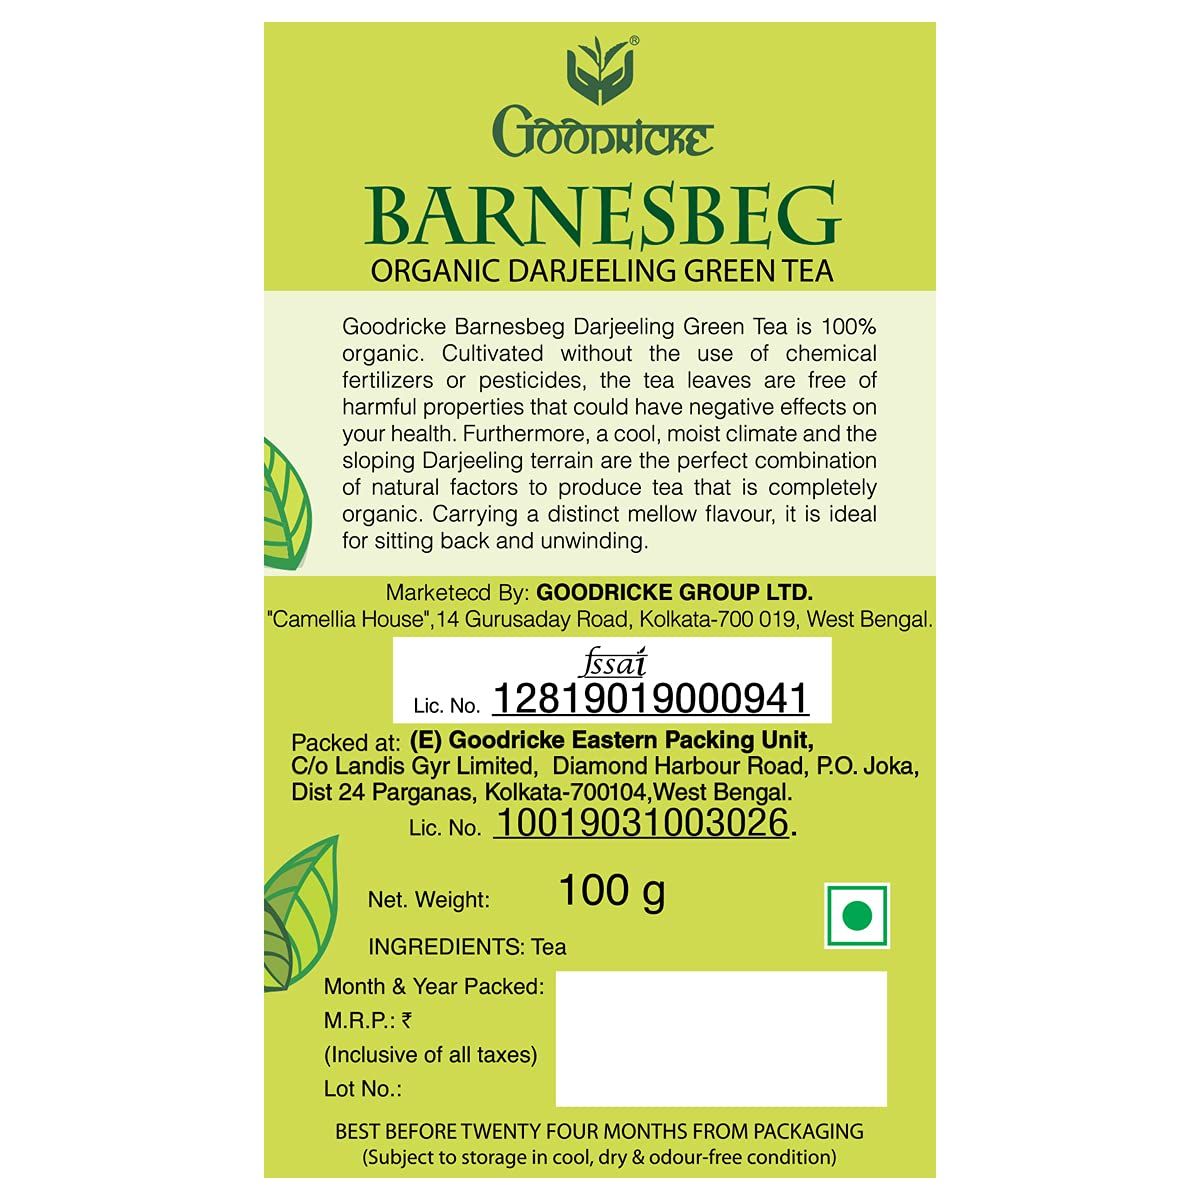 Goodricke Barnesneg 100% Organic Darjeeling Green Tea Image